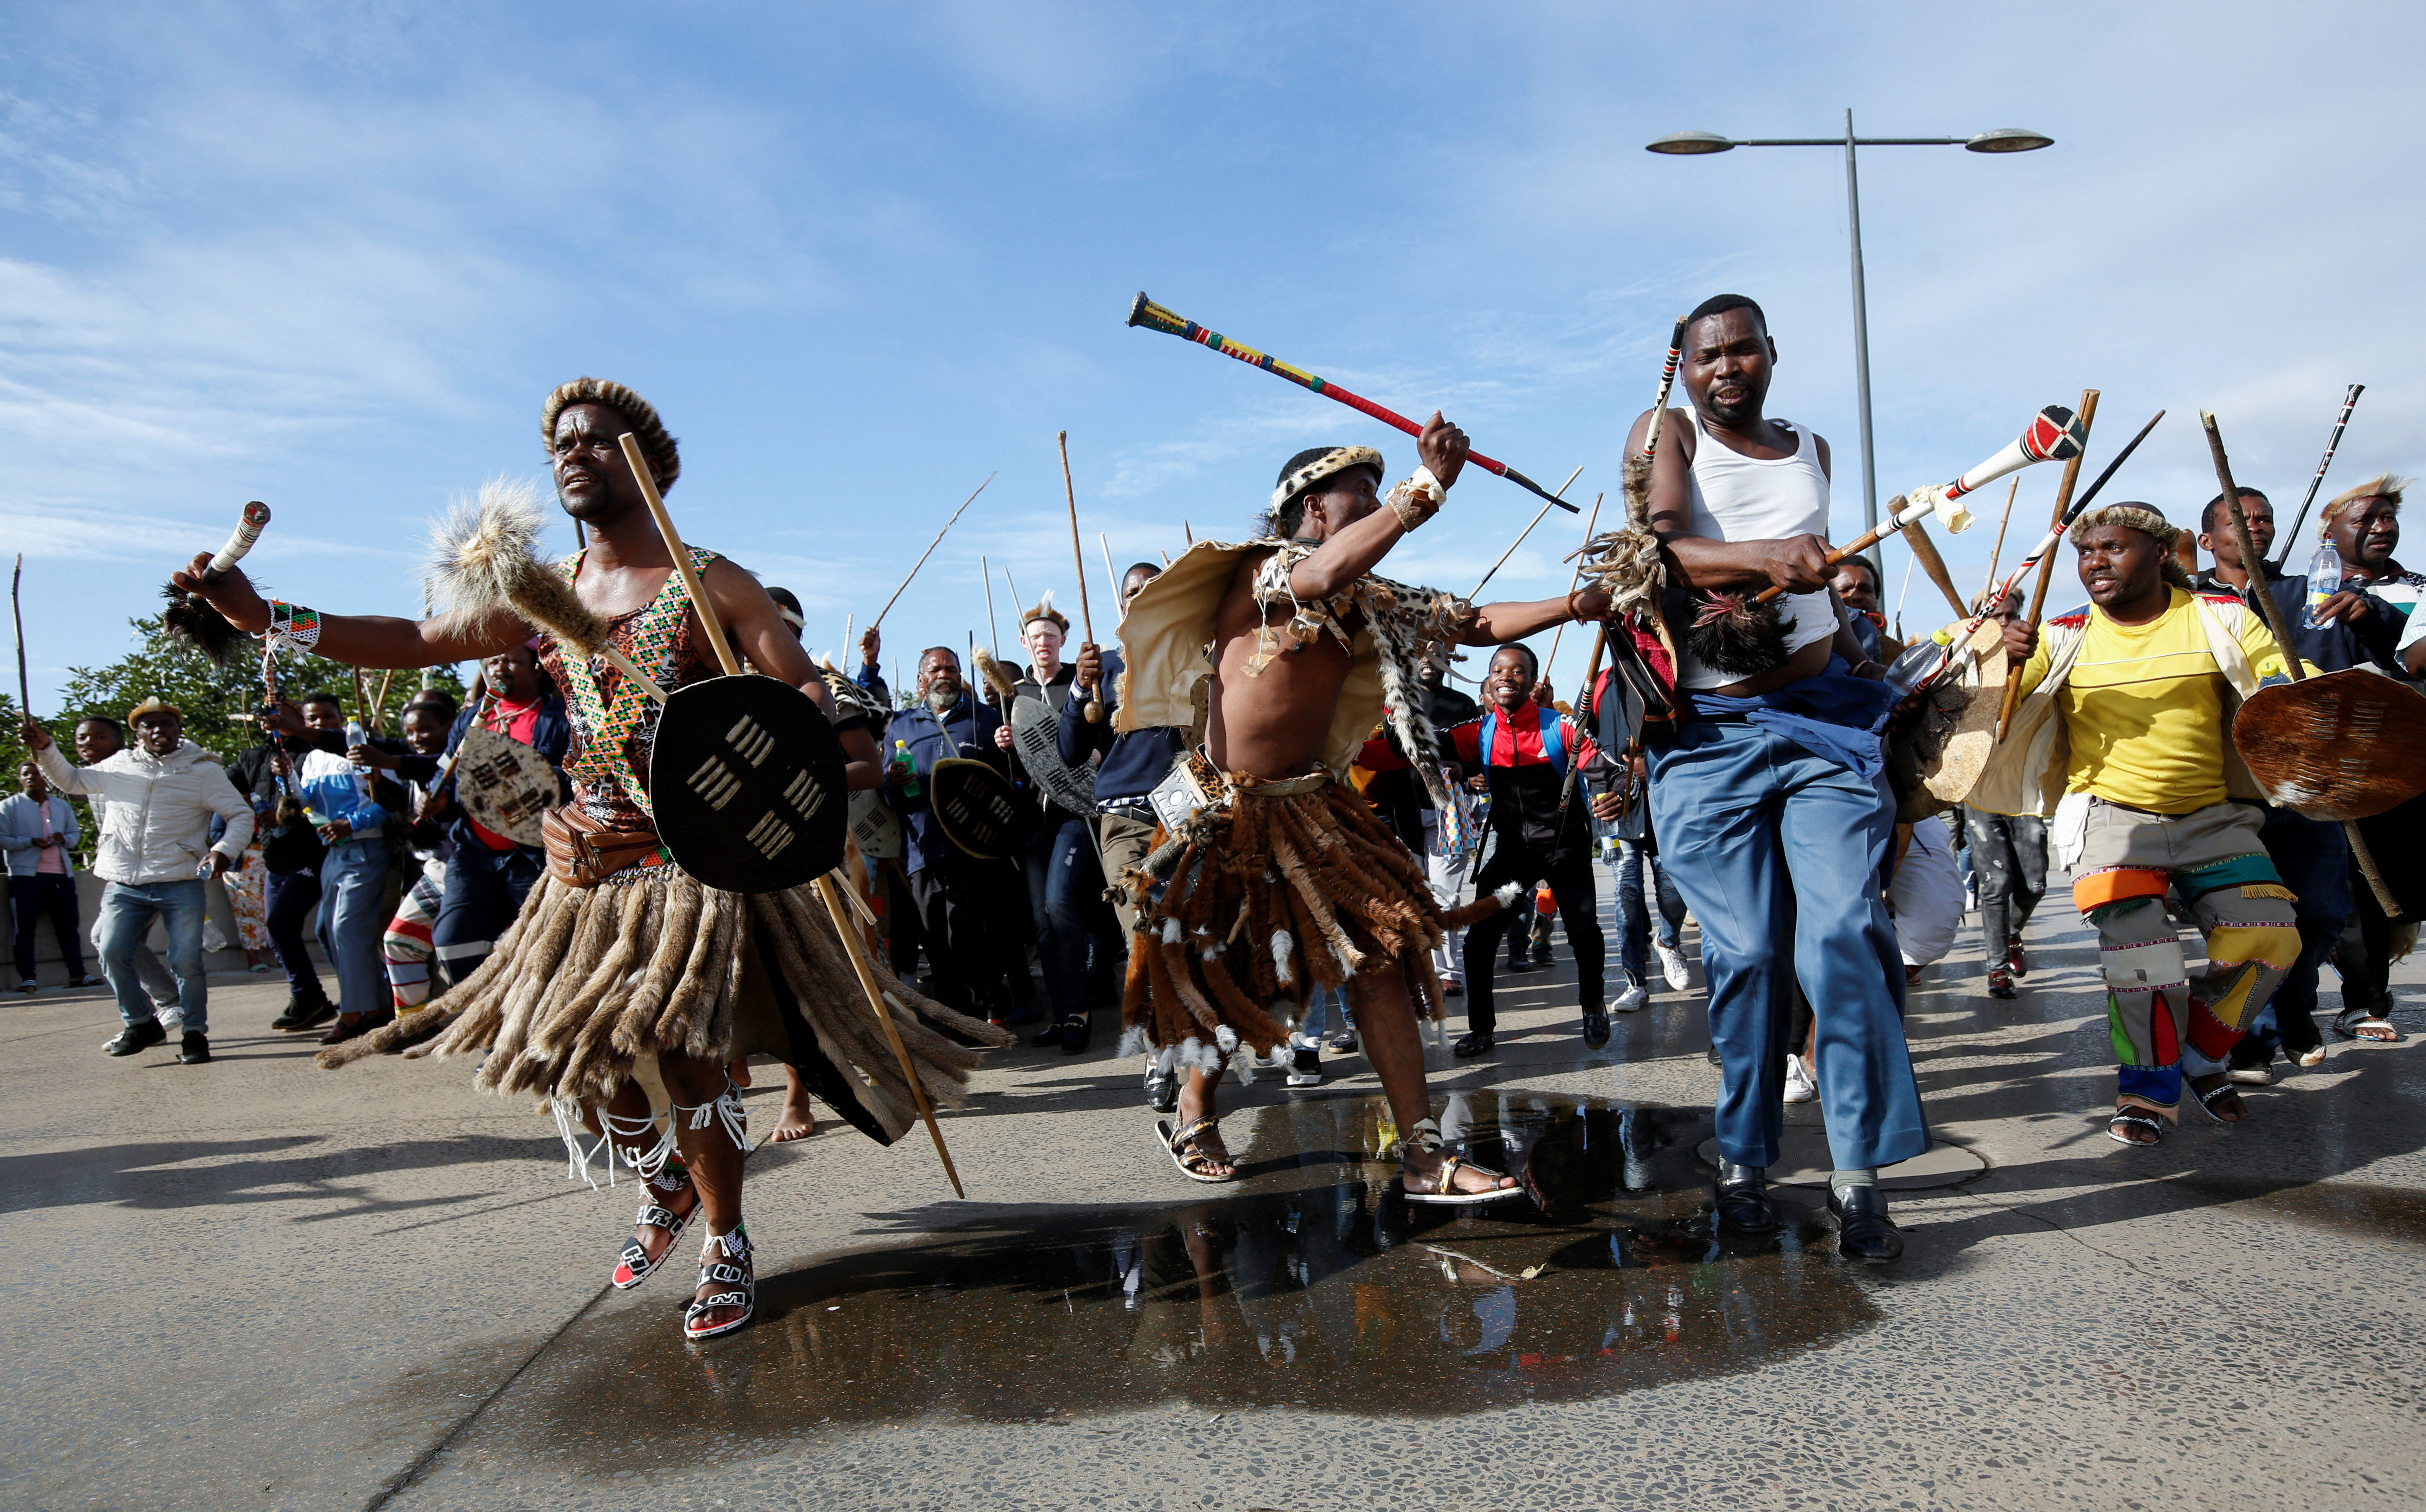 Supporters of new AmaZulu King Misuzulu kaZwelithini arrive ahead of the final ceremony of his coronation in Durban